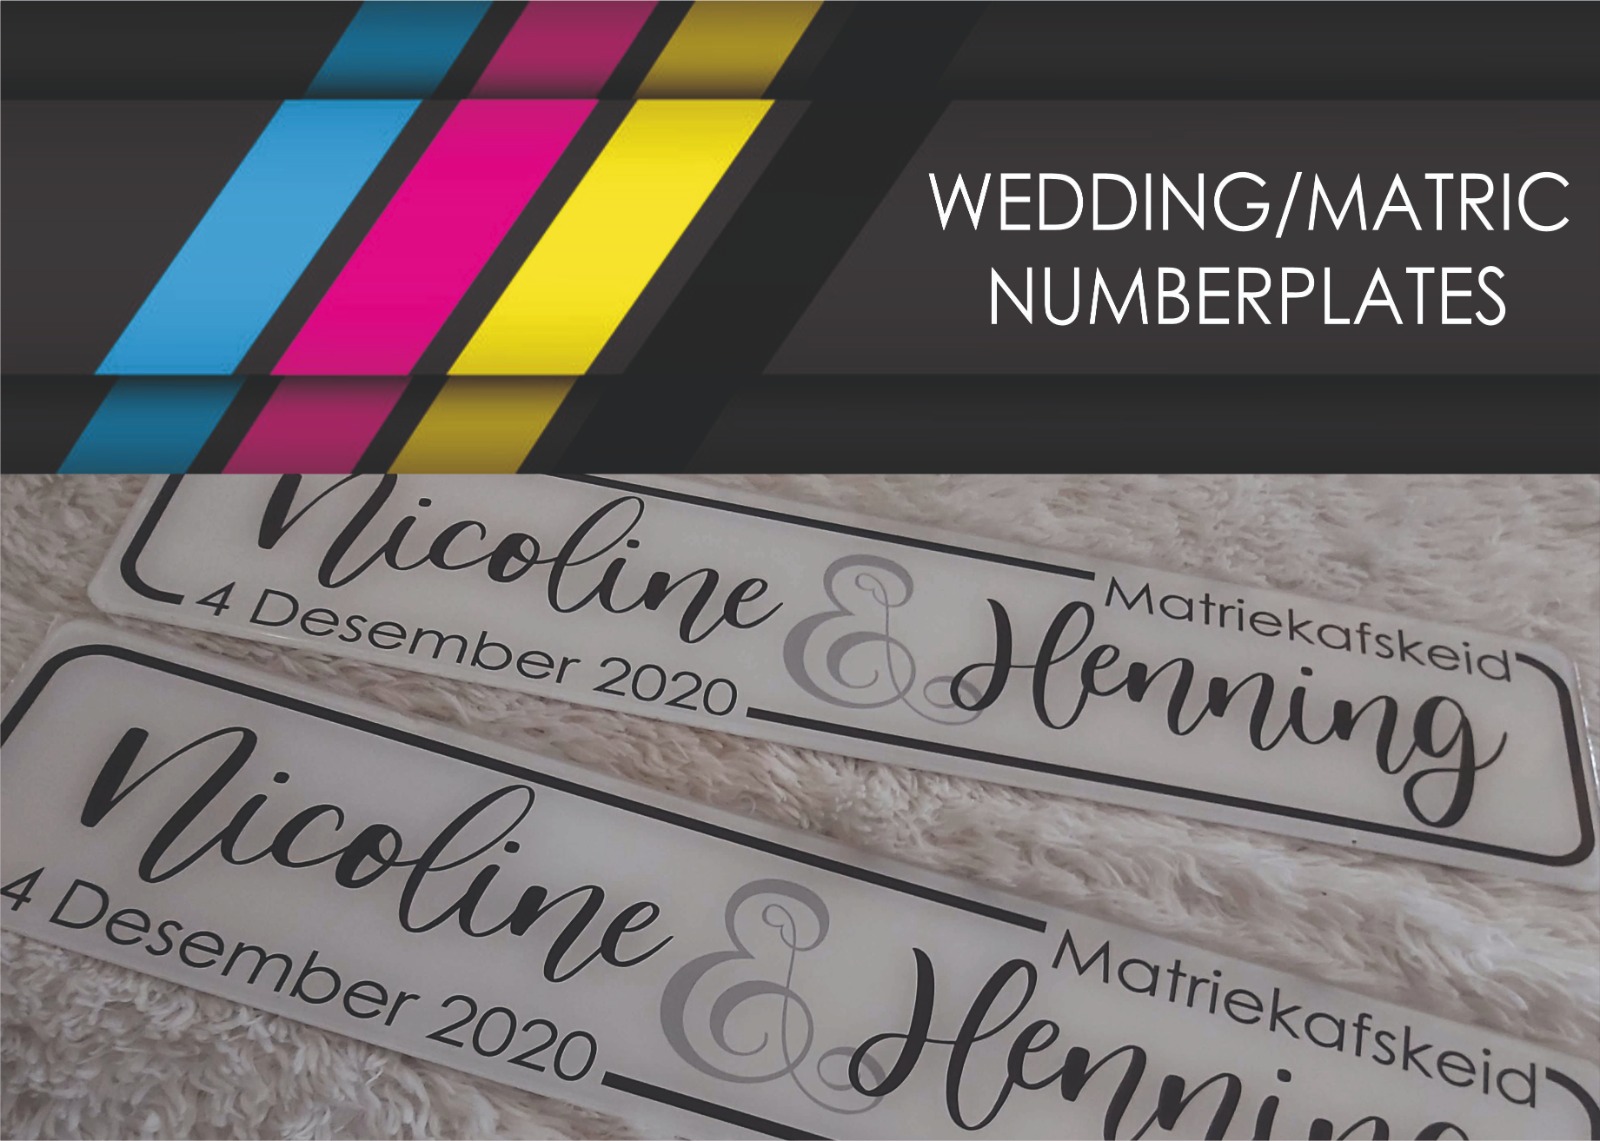 weddingmatric-numberplates